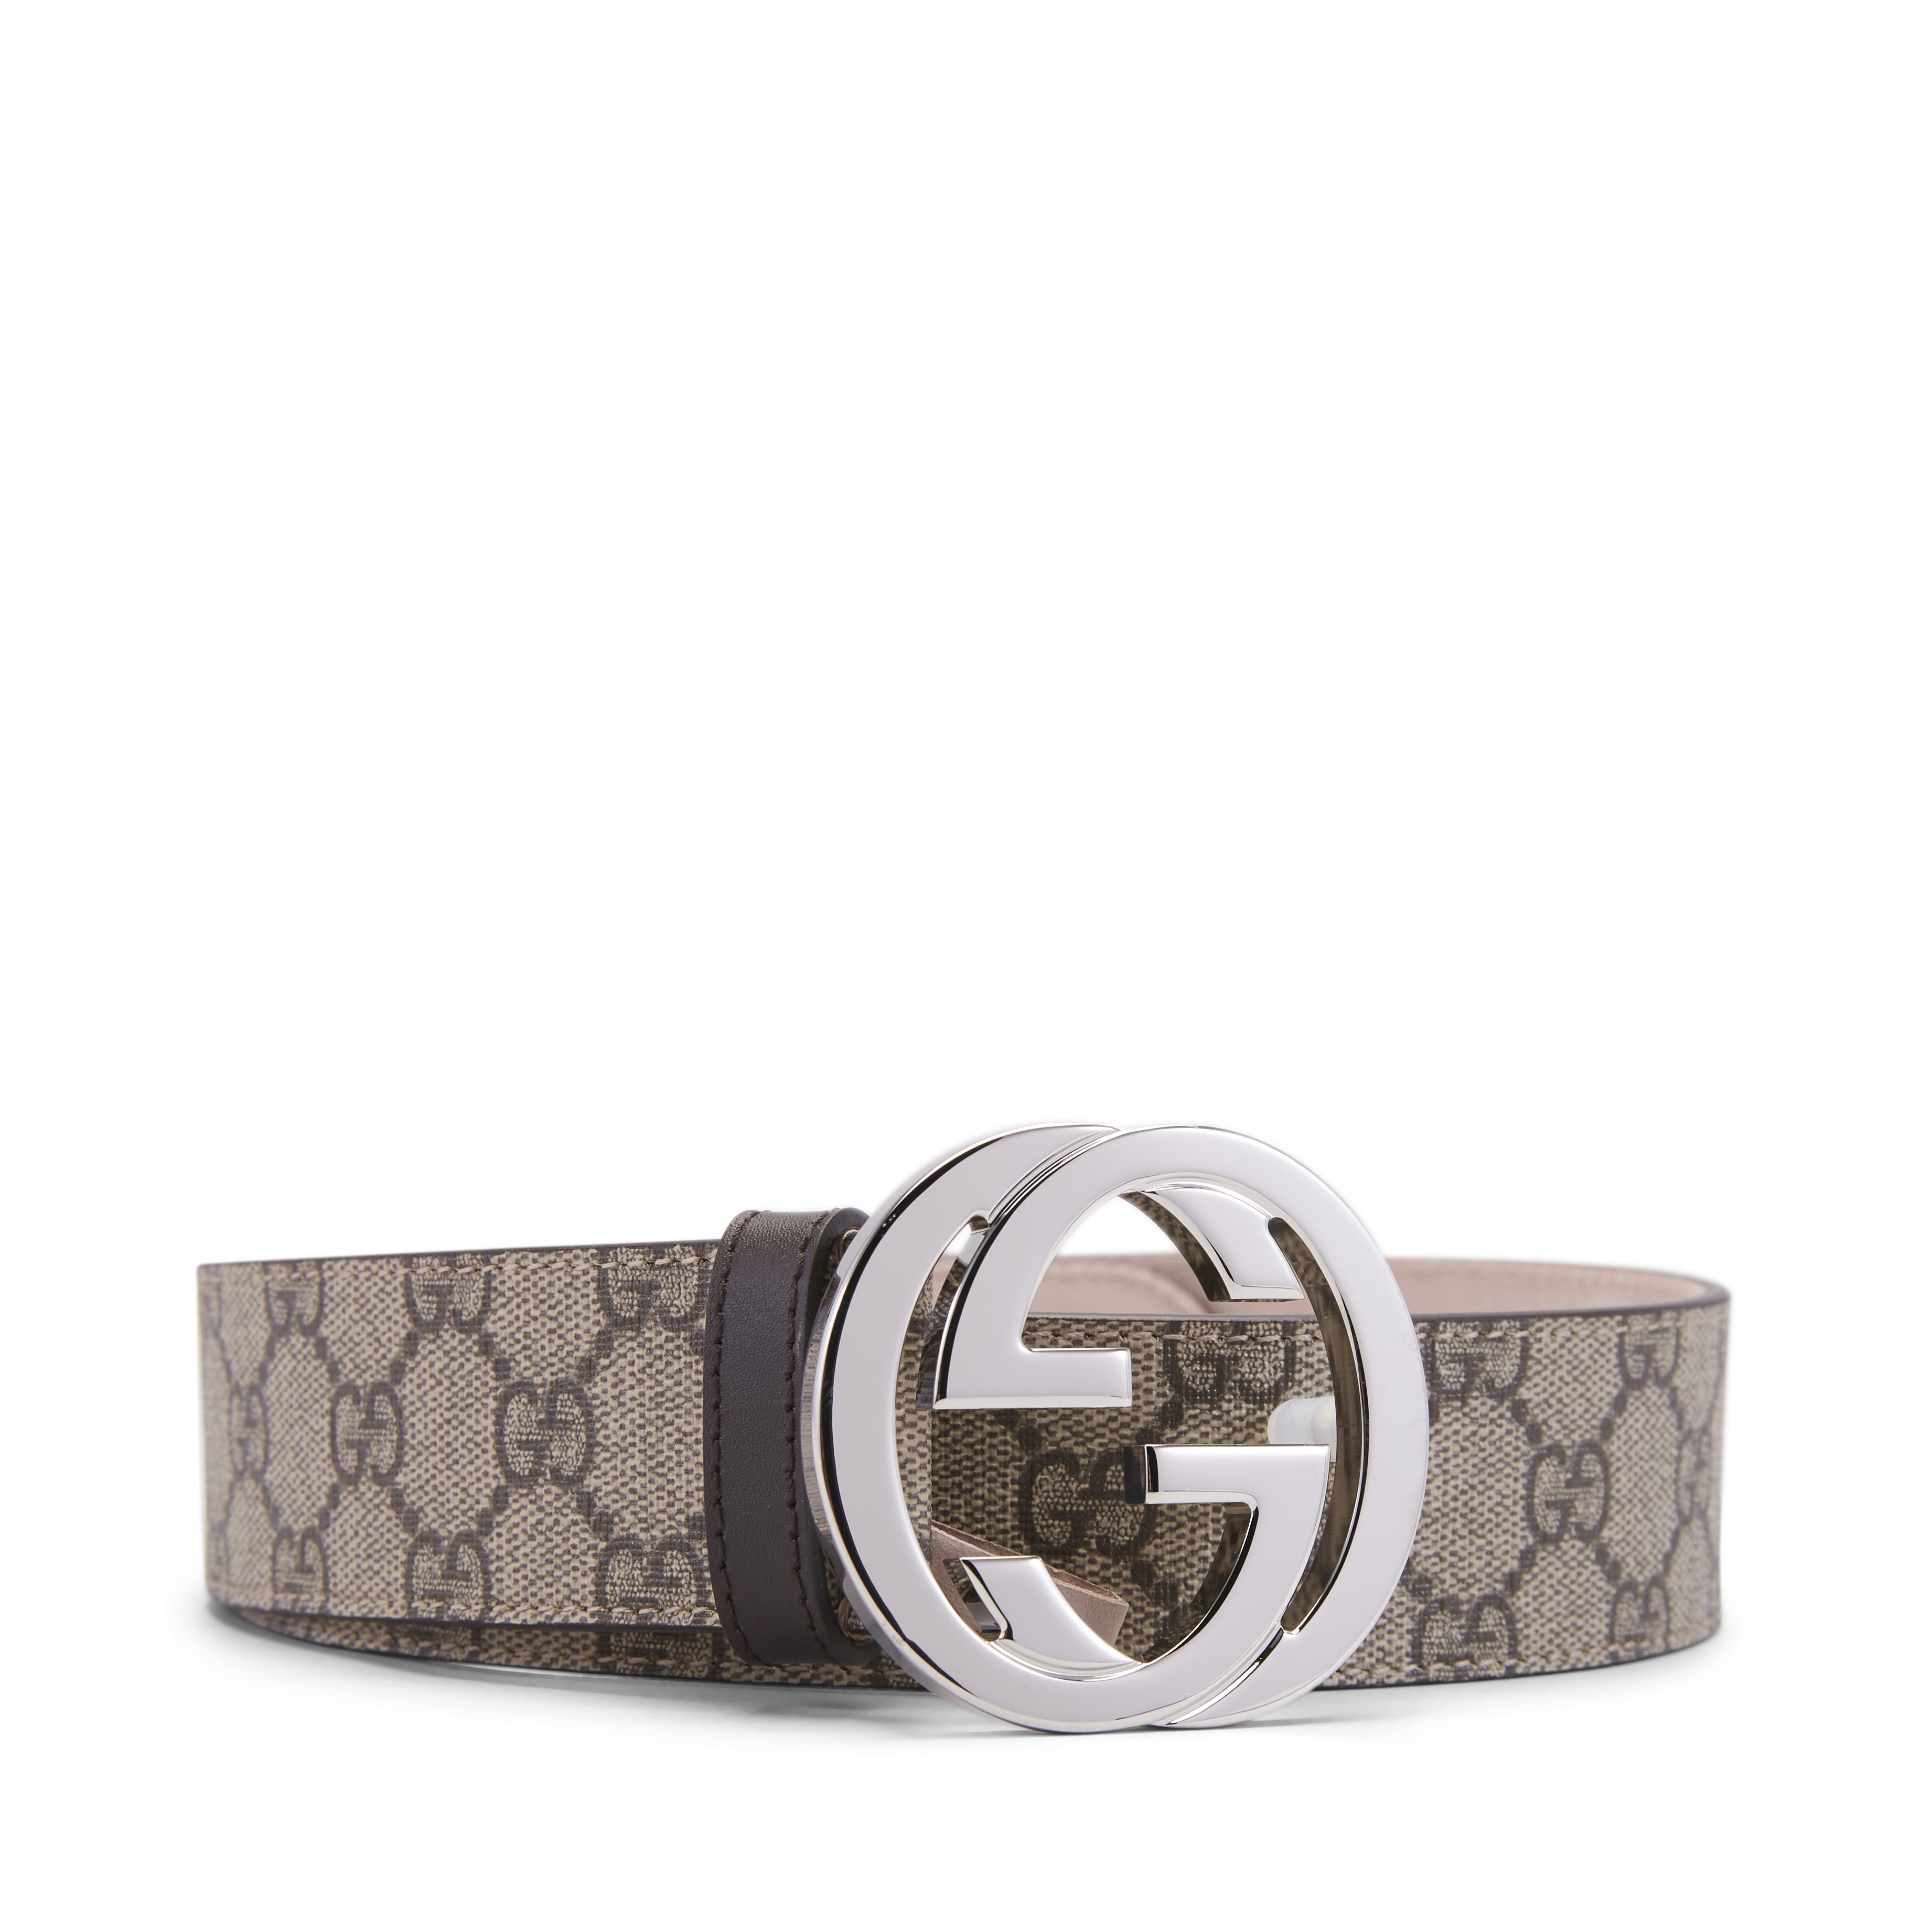 gg gucci belt